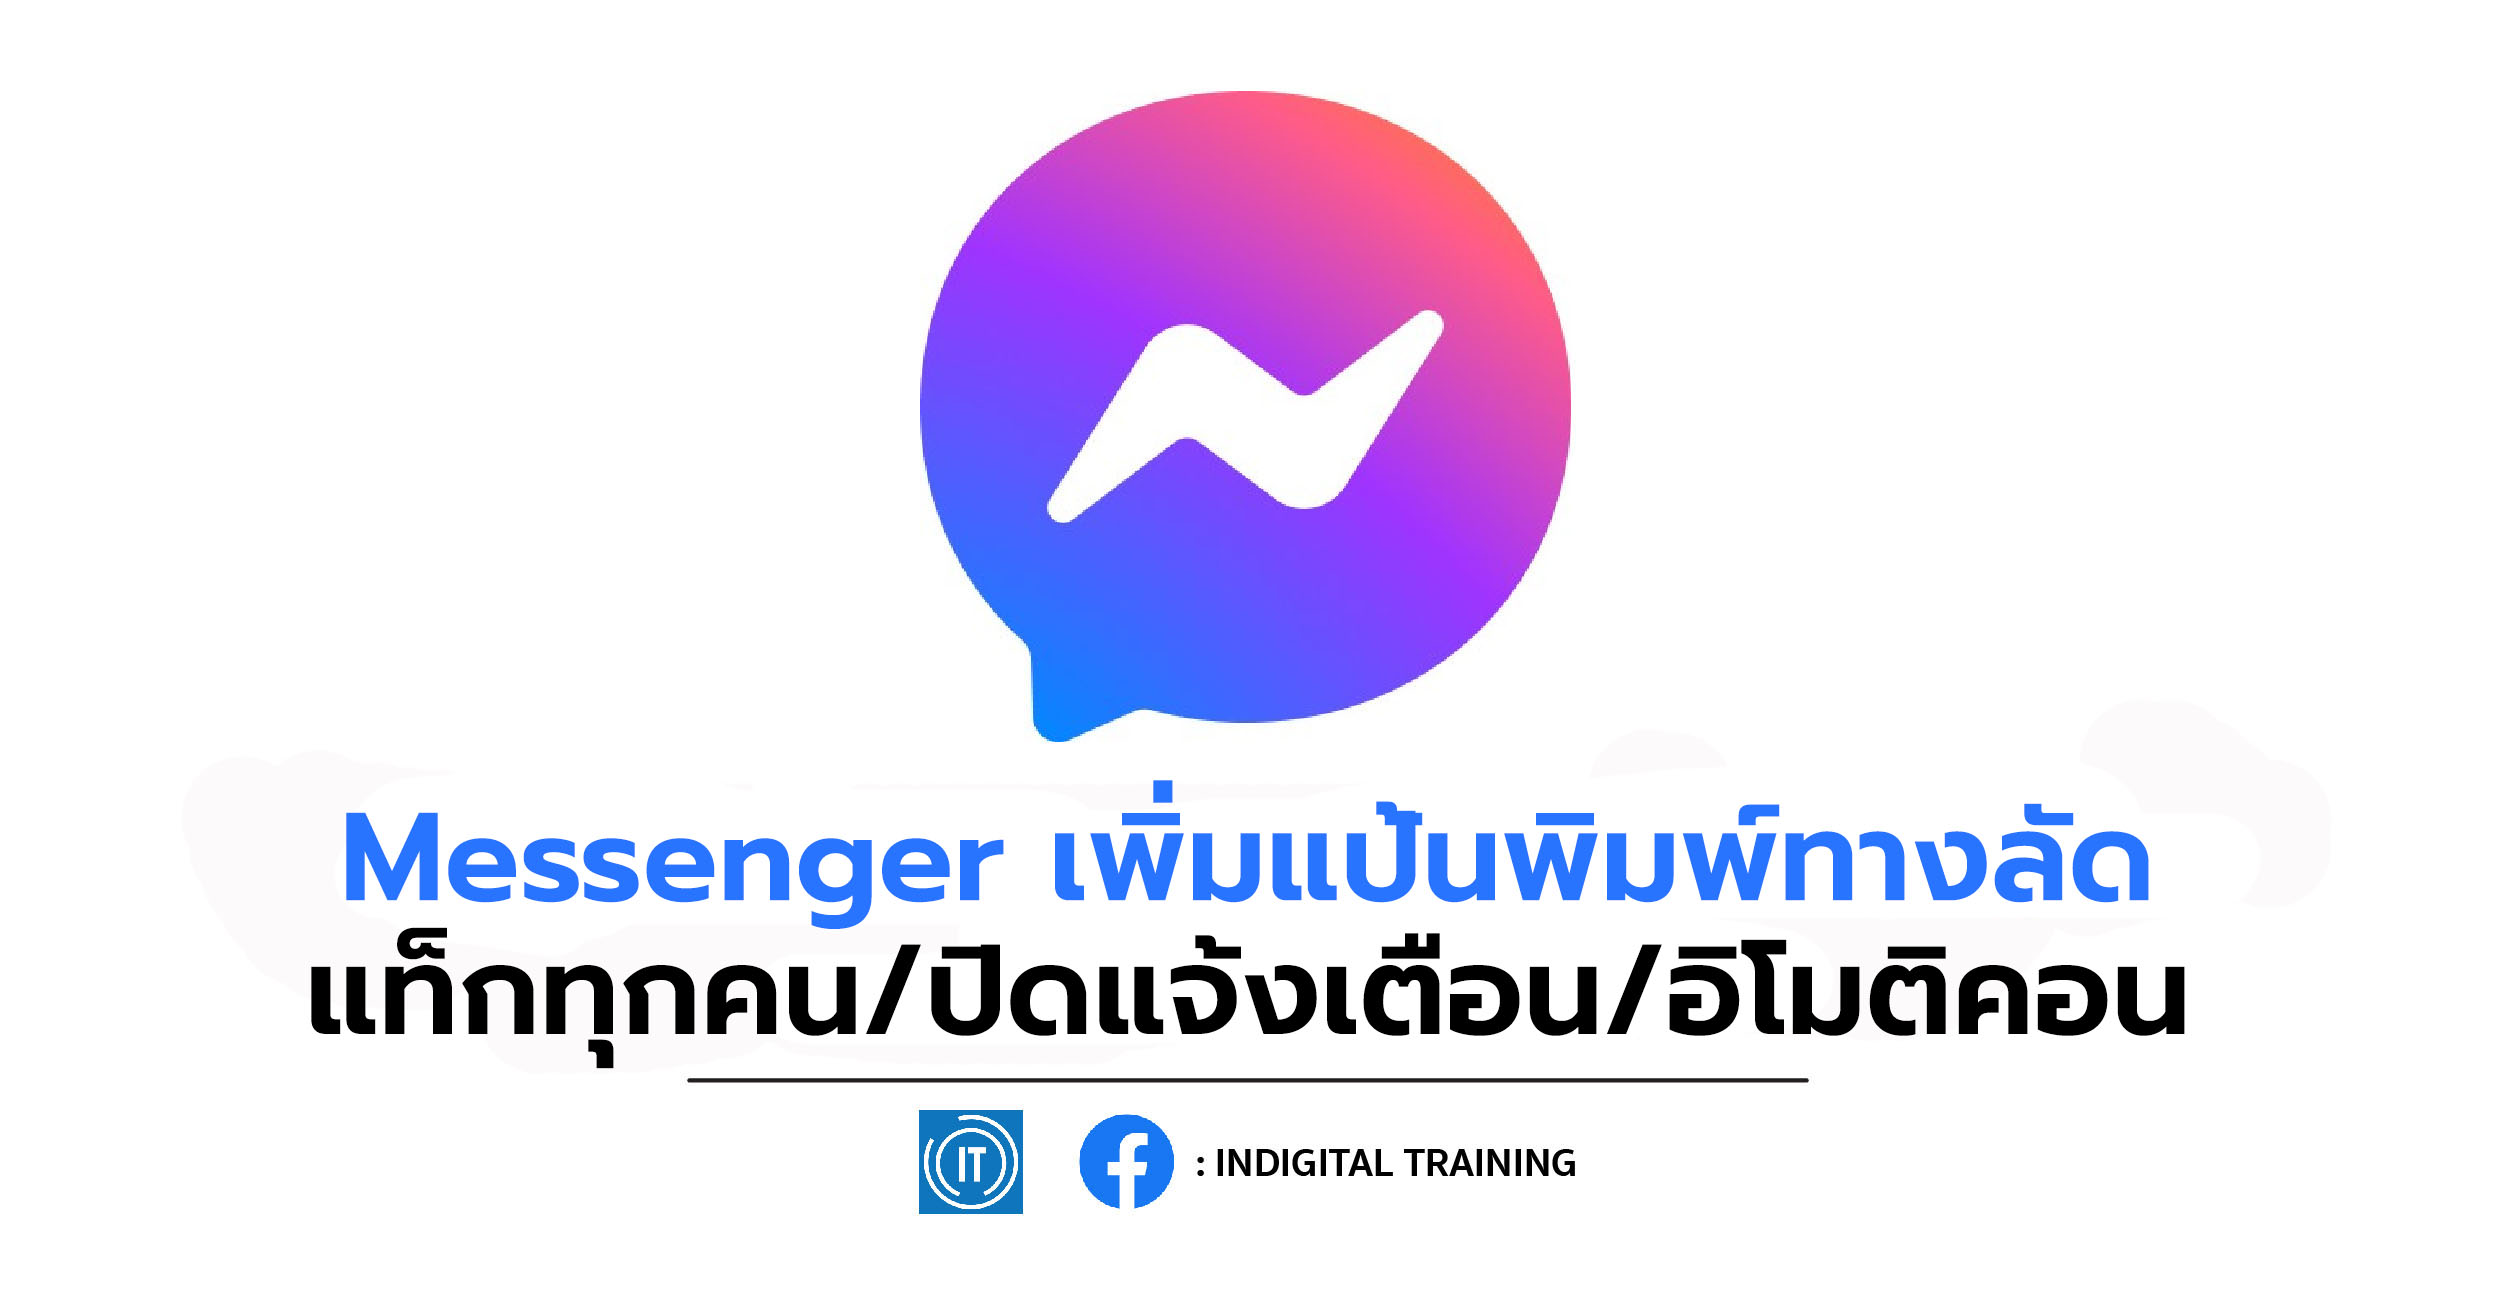 Messenger เพิ่มแป้นพิมพ์ทางลัด แท็กทุกคน/ปิดแจ้งเตือน/อิโมติคอน